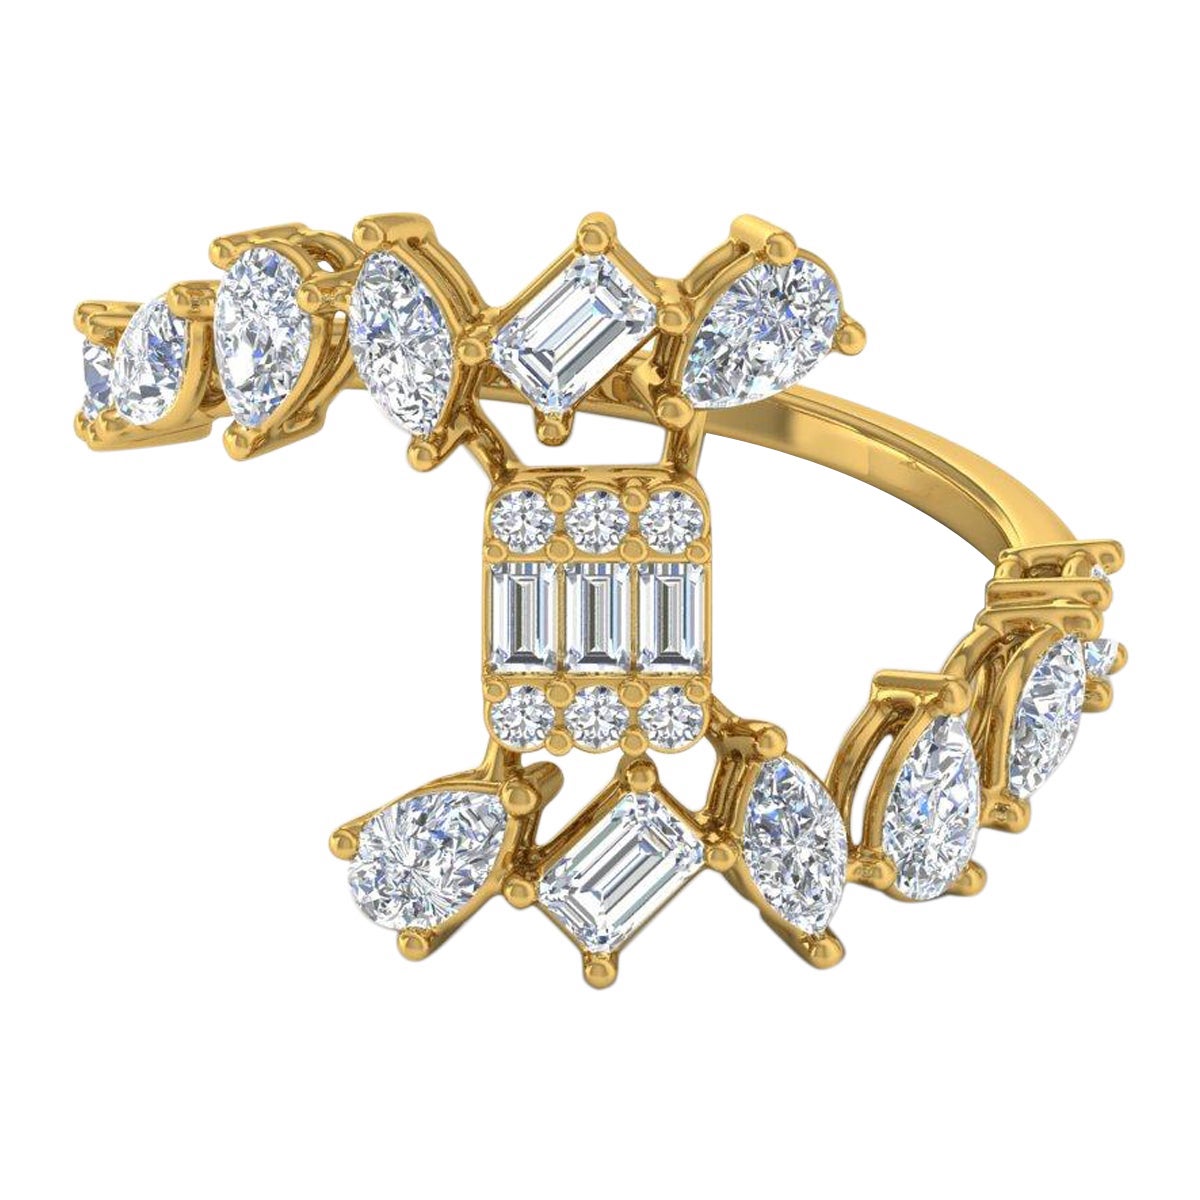 1.6 Carat SI Clarity HI Color Pear Emerald Cut Diamond Ring 14 Karat Yellow Gold For Sale